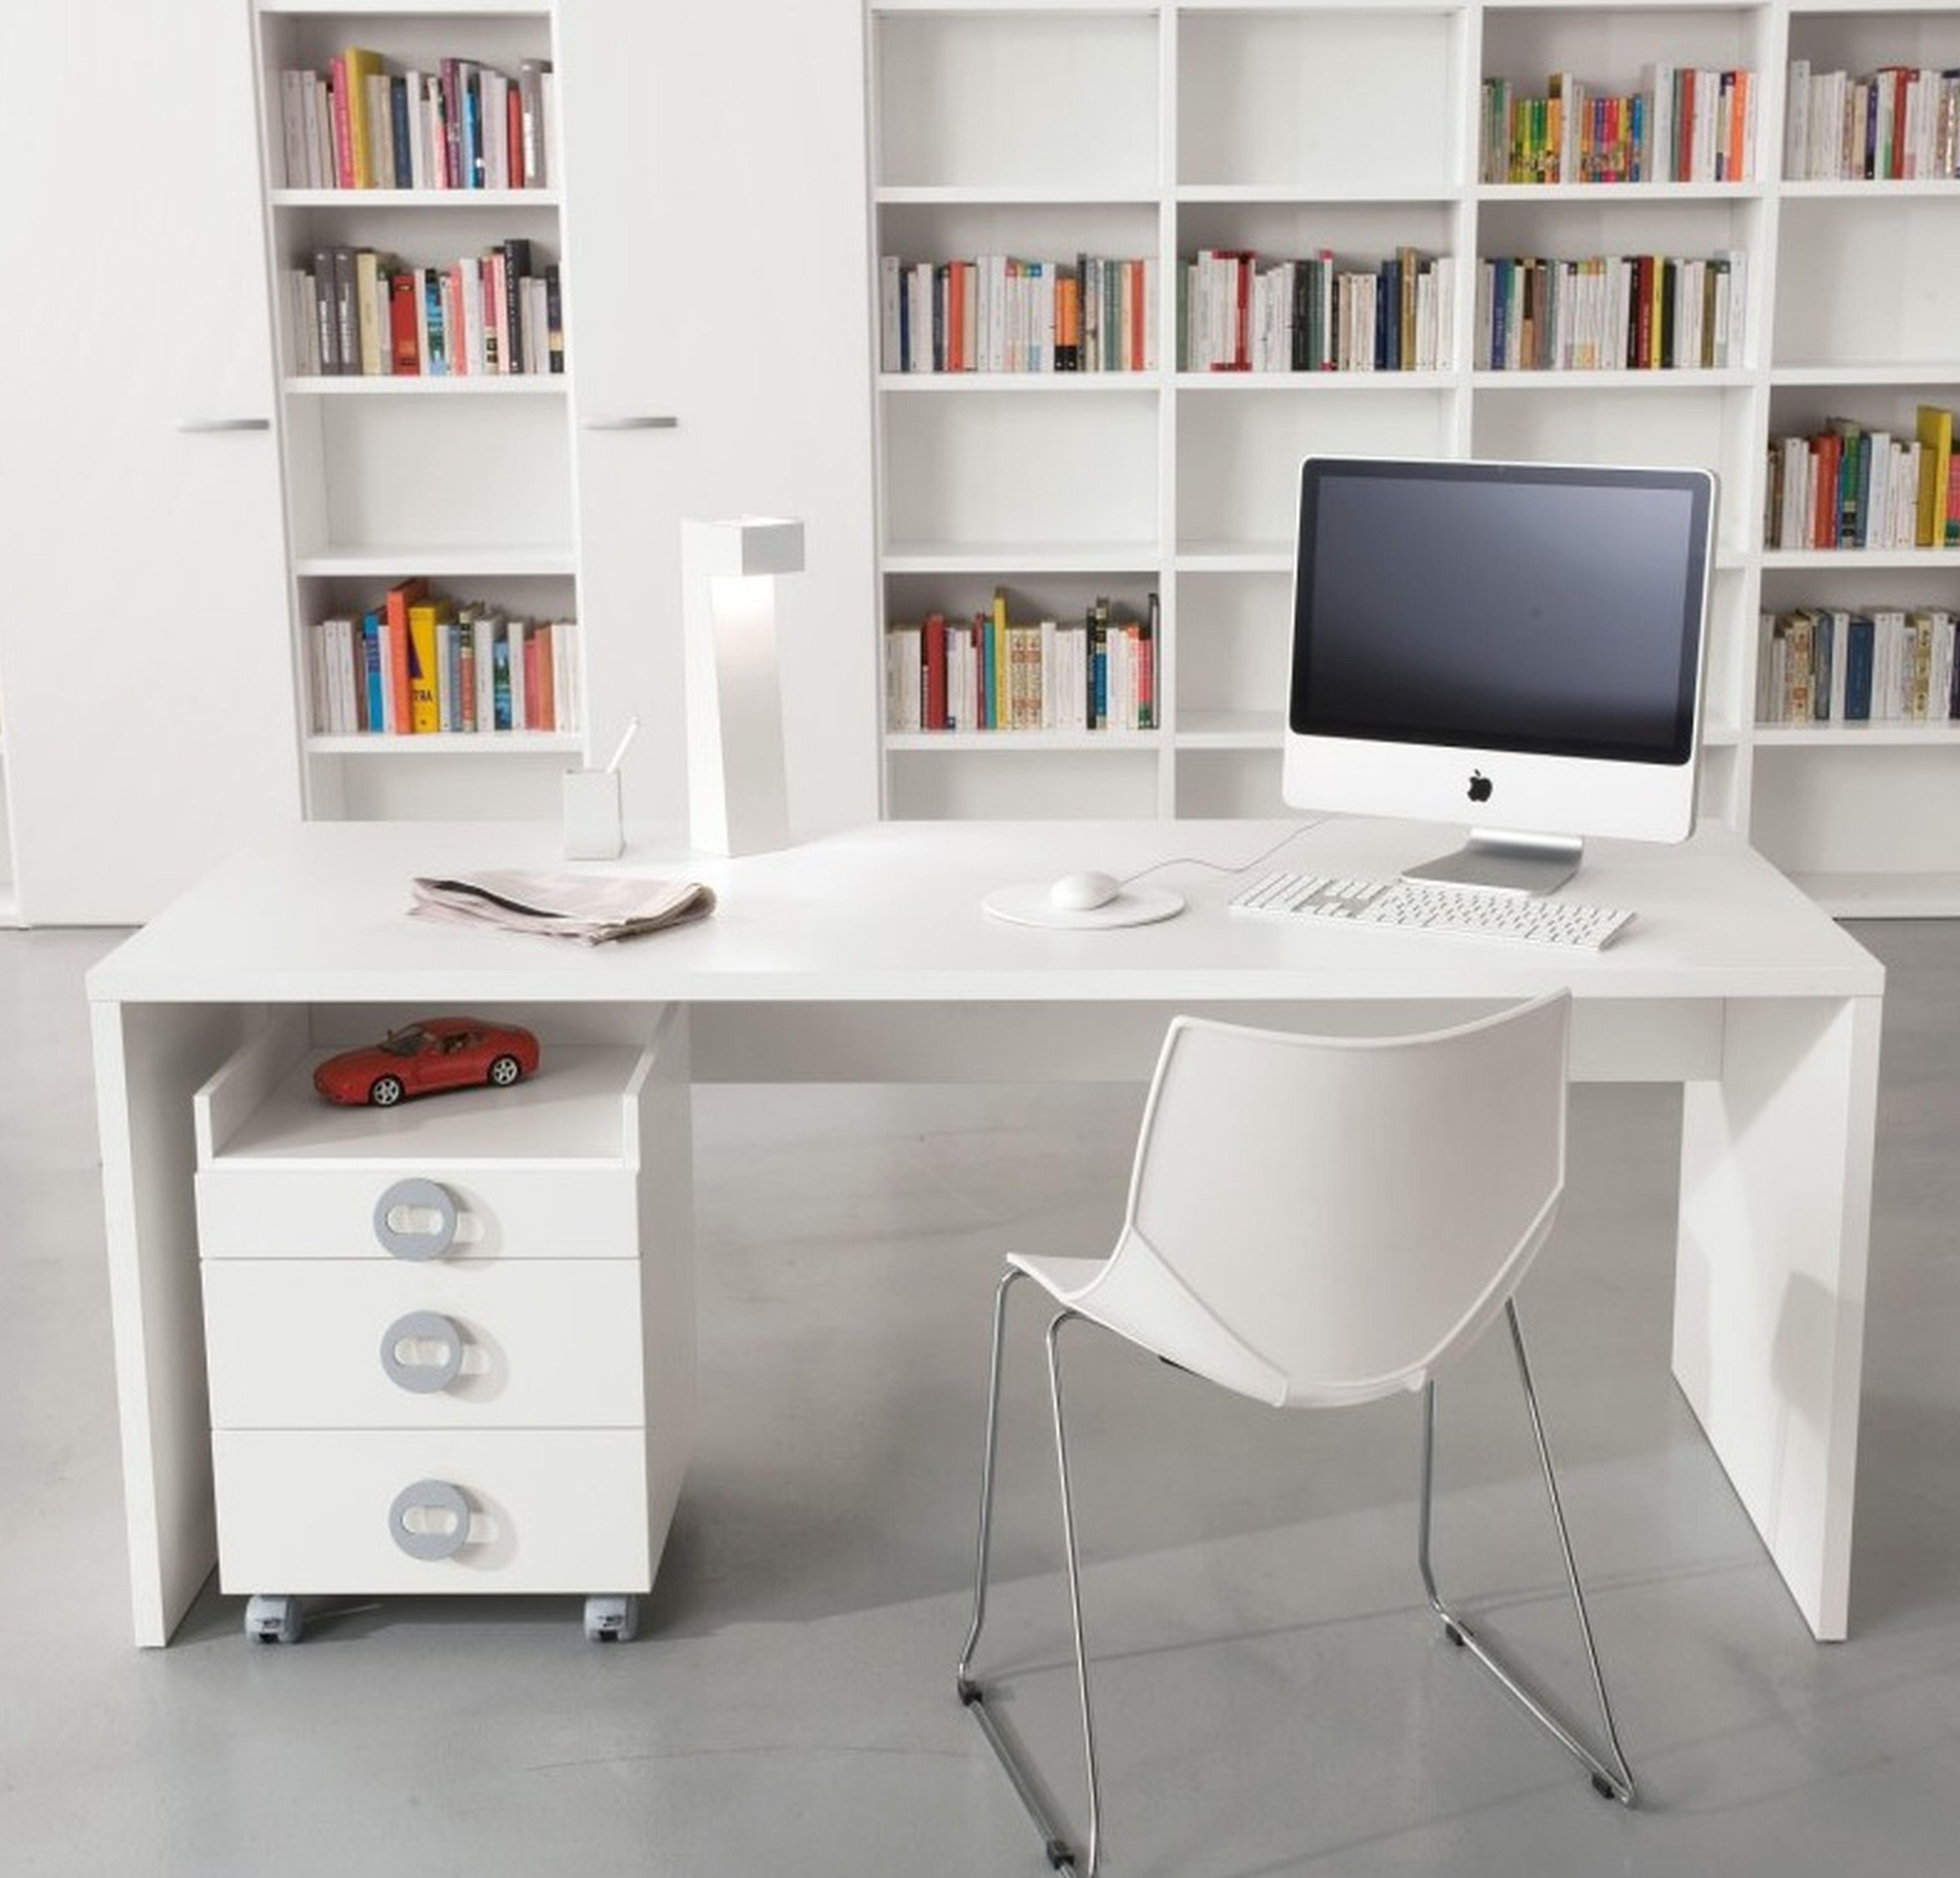 Shelf Facing Desk Big Shelf Facing Modern White Desk Plus Cool Table Lamp And Amusing Storage Near Chair Furniture Perfect Modern White Desk Application For Home Office